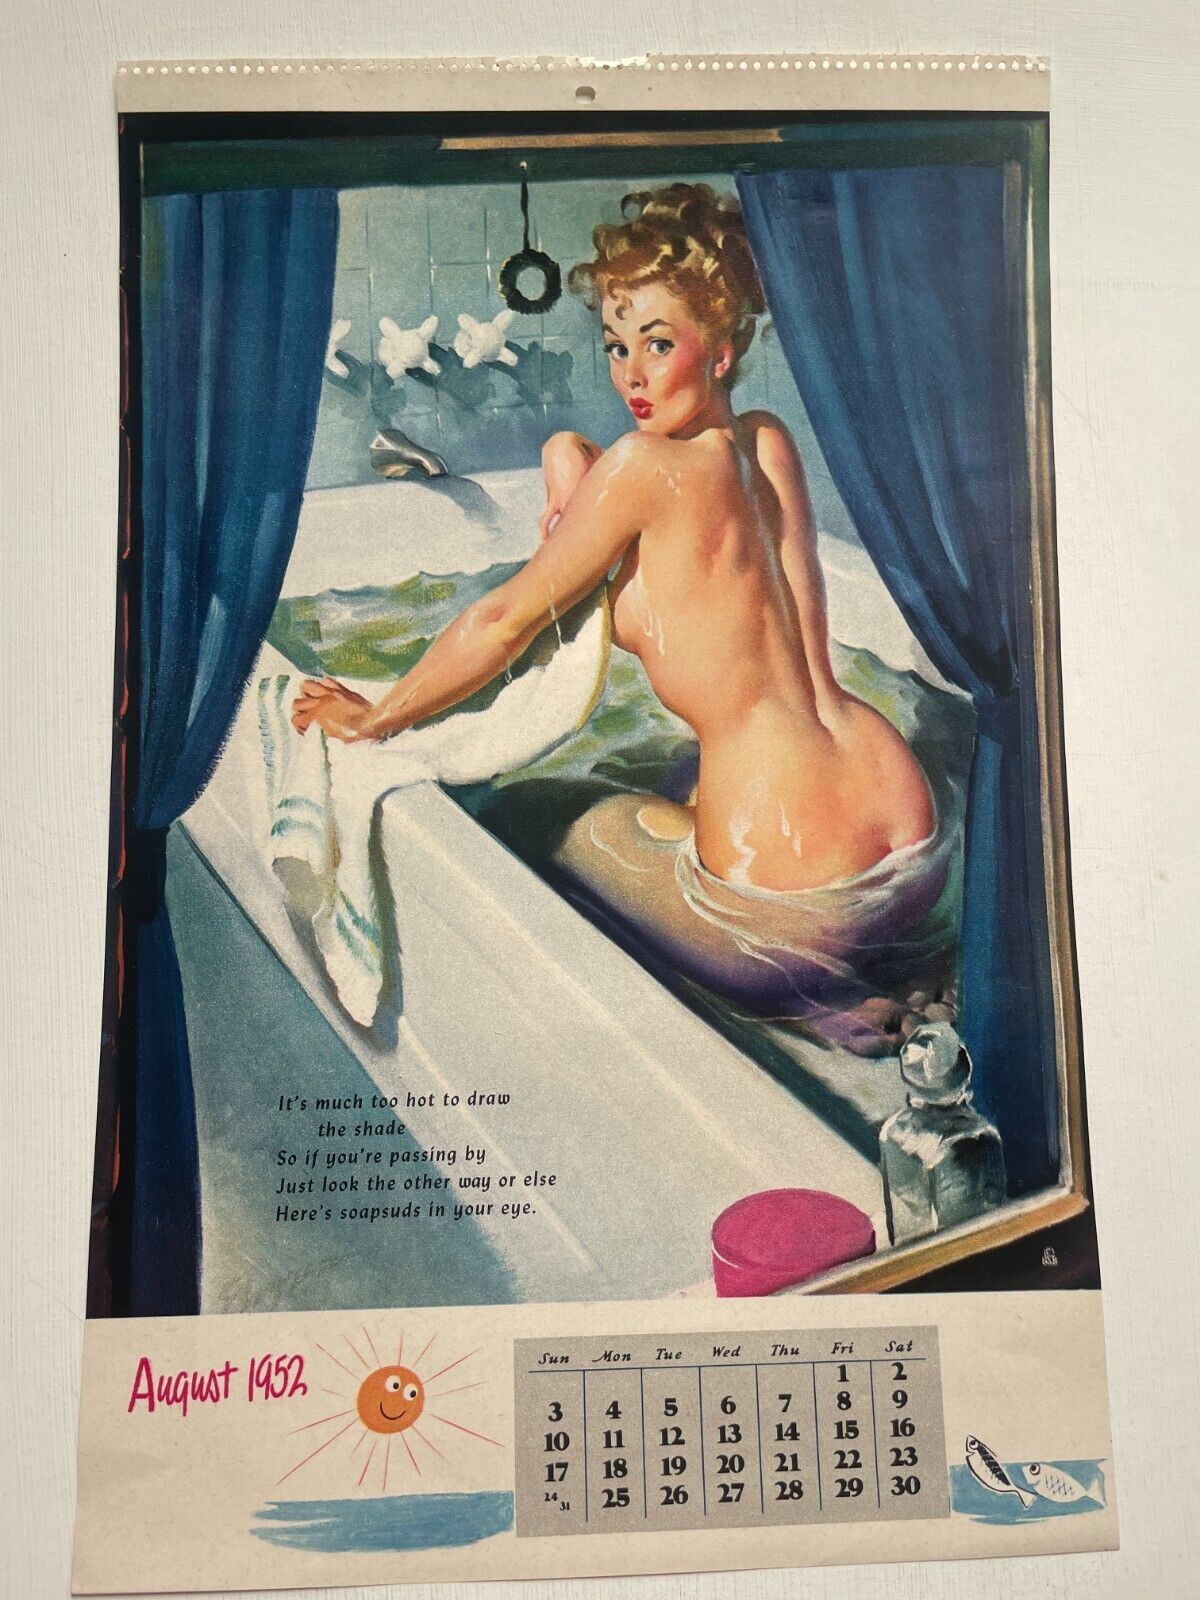 August 1952 Pinup Girl Calendar Page by Elvgren- Blond Woman in Bathtub